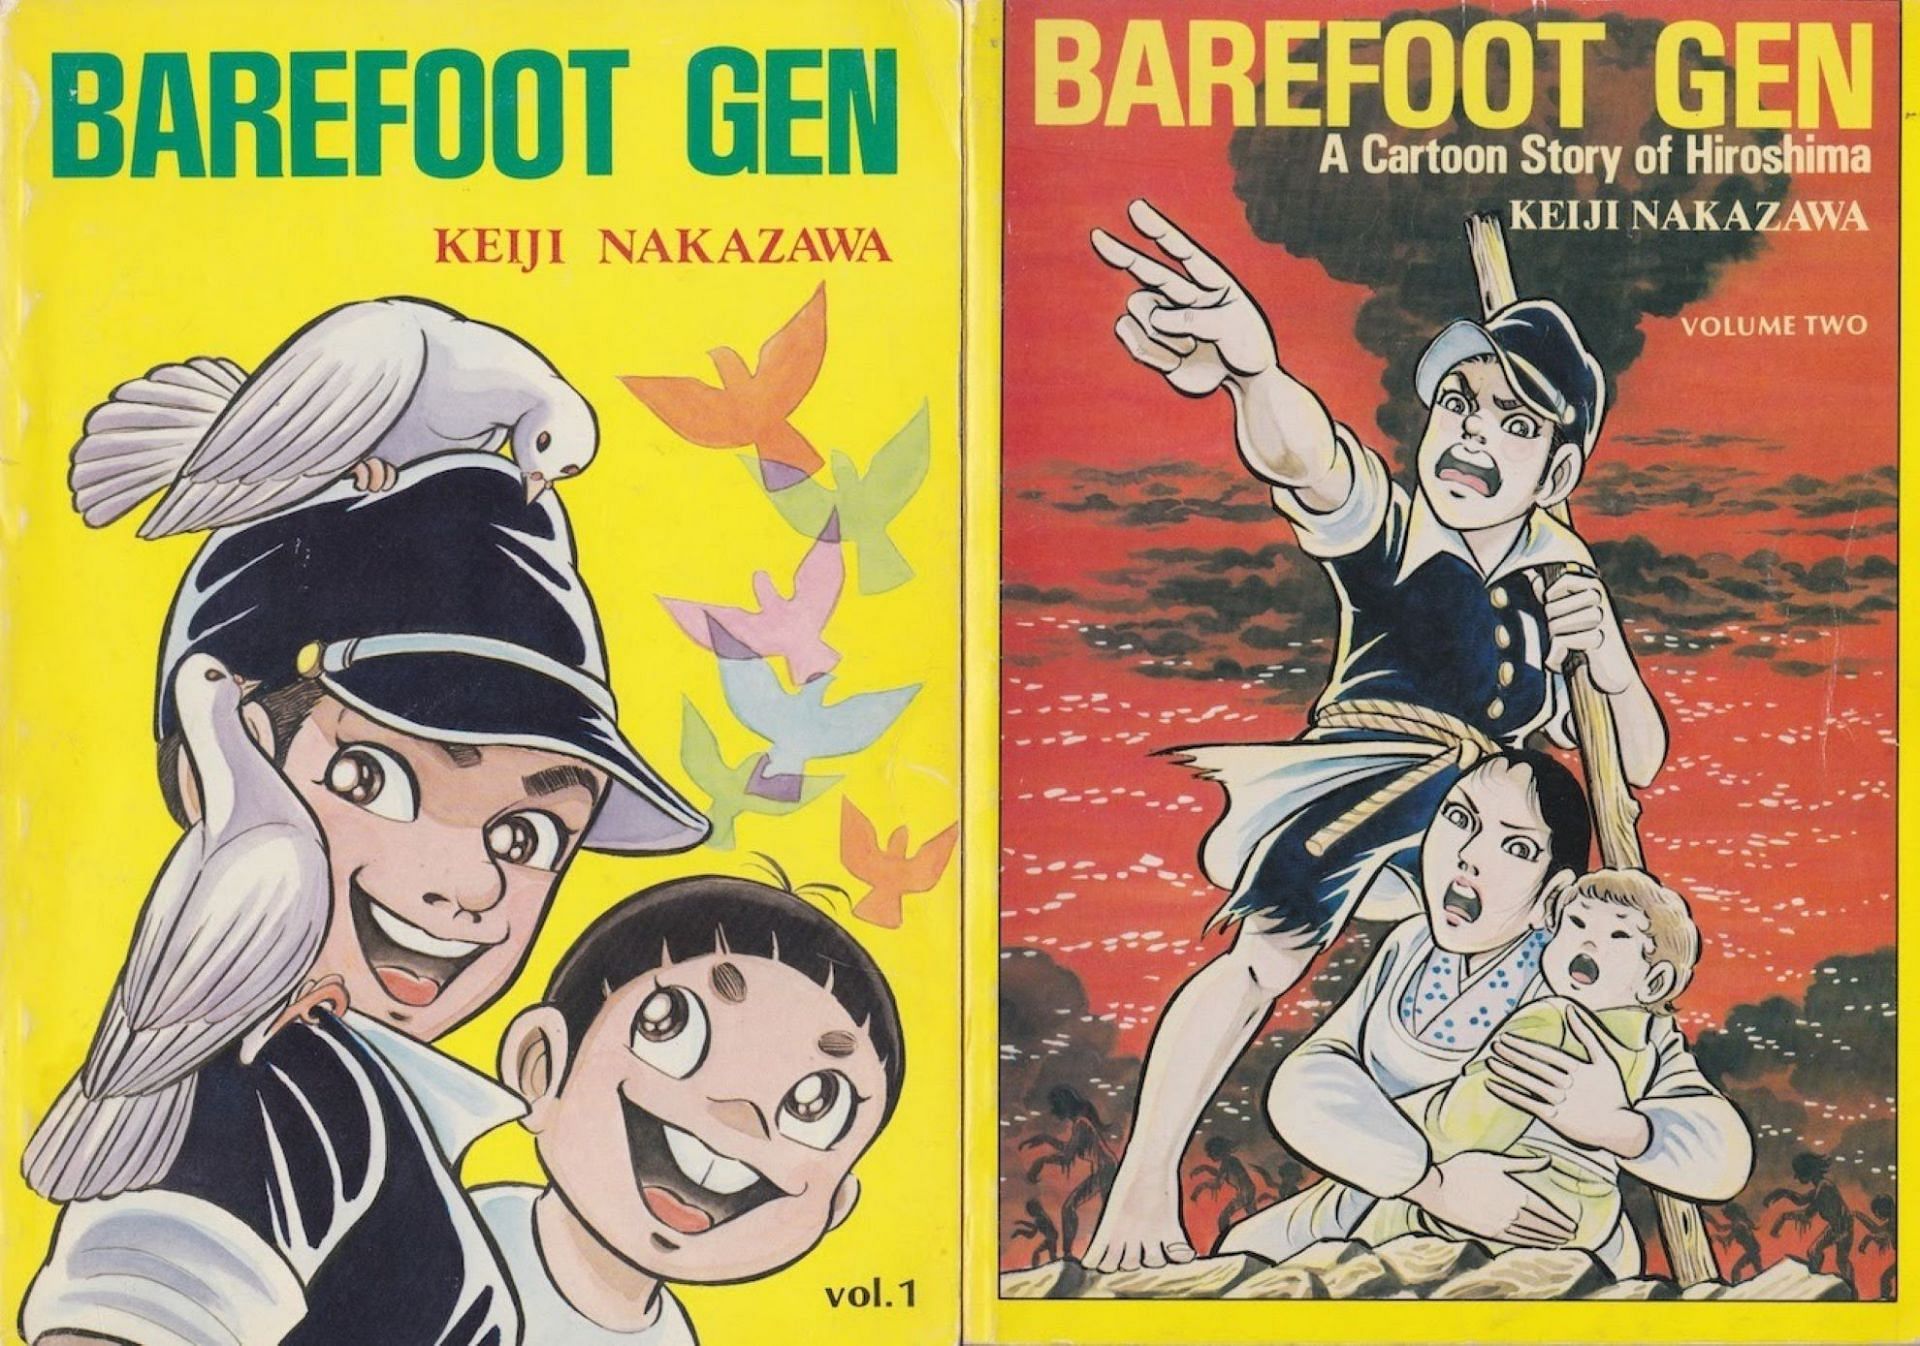 Barefoot Gen manga covers (Image via Keiji Nakazawa/Shueisha)